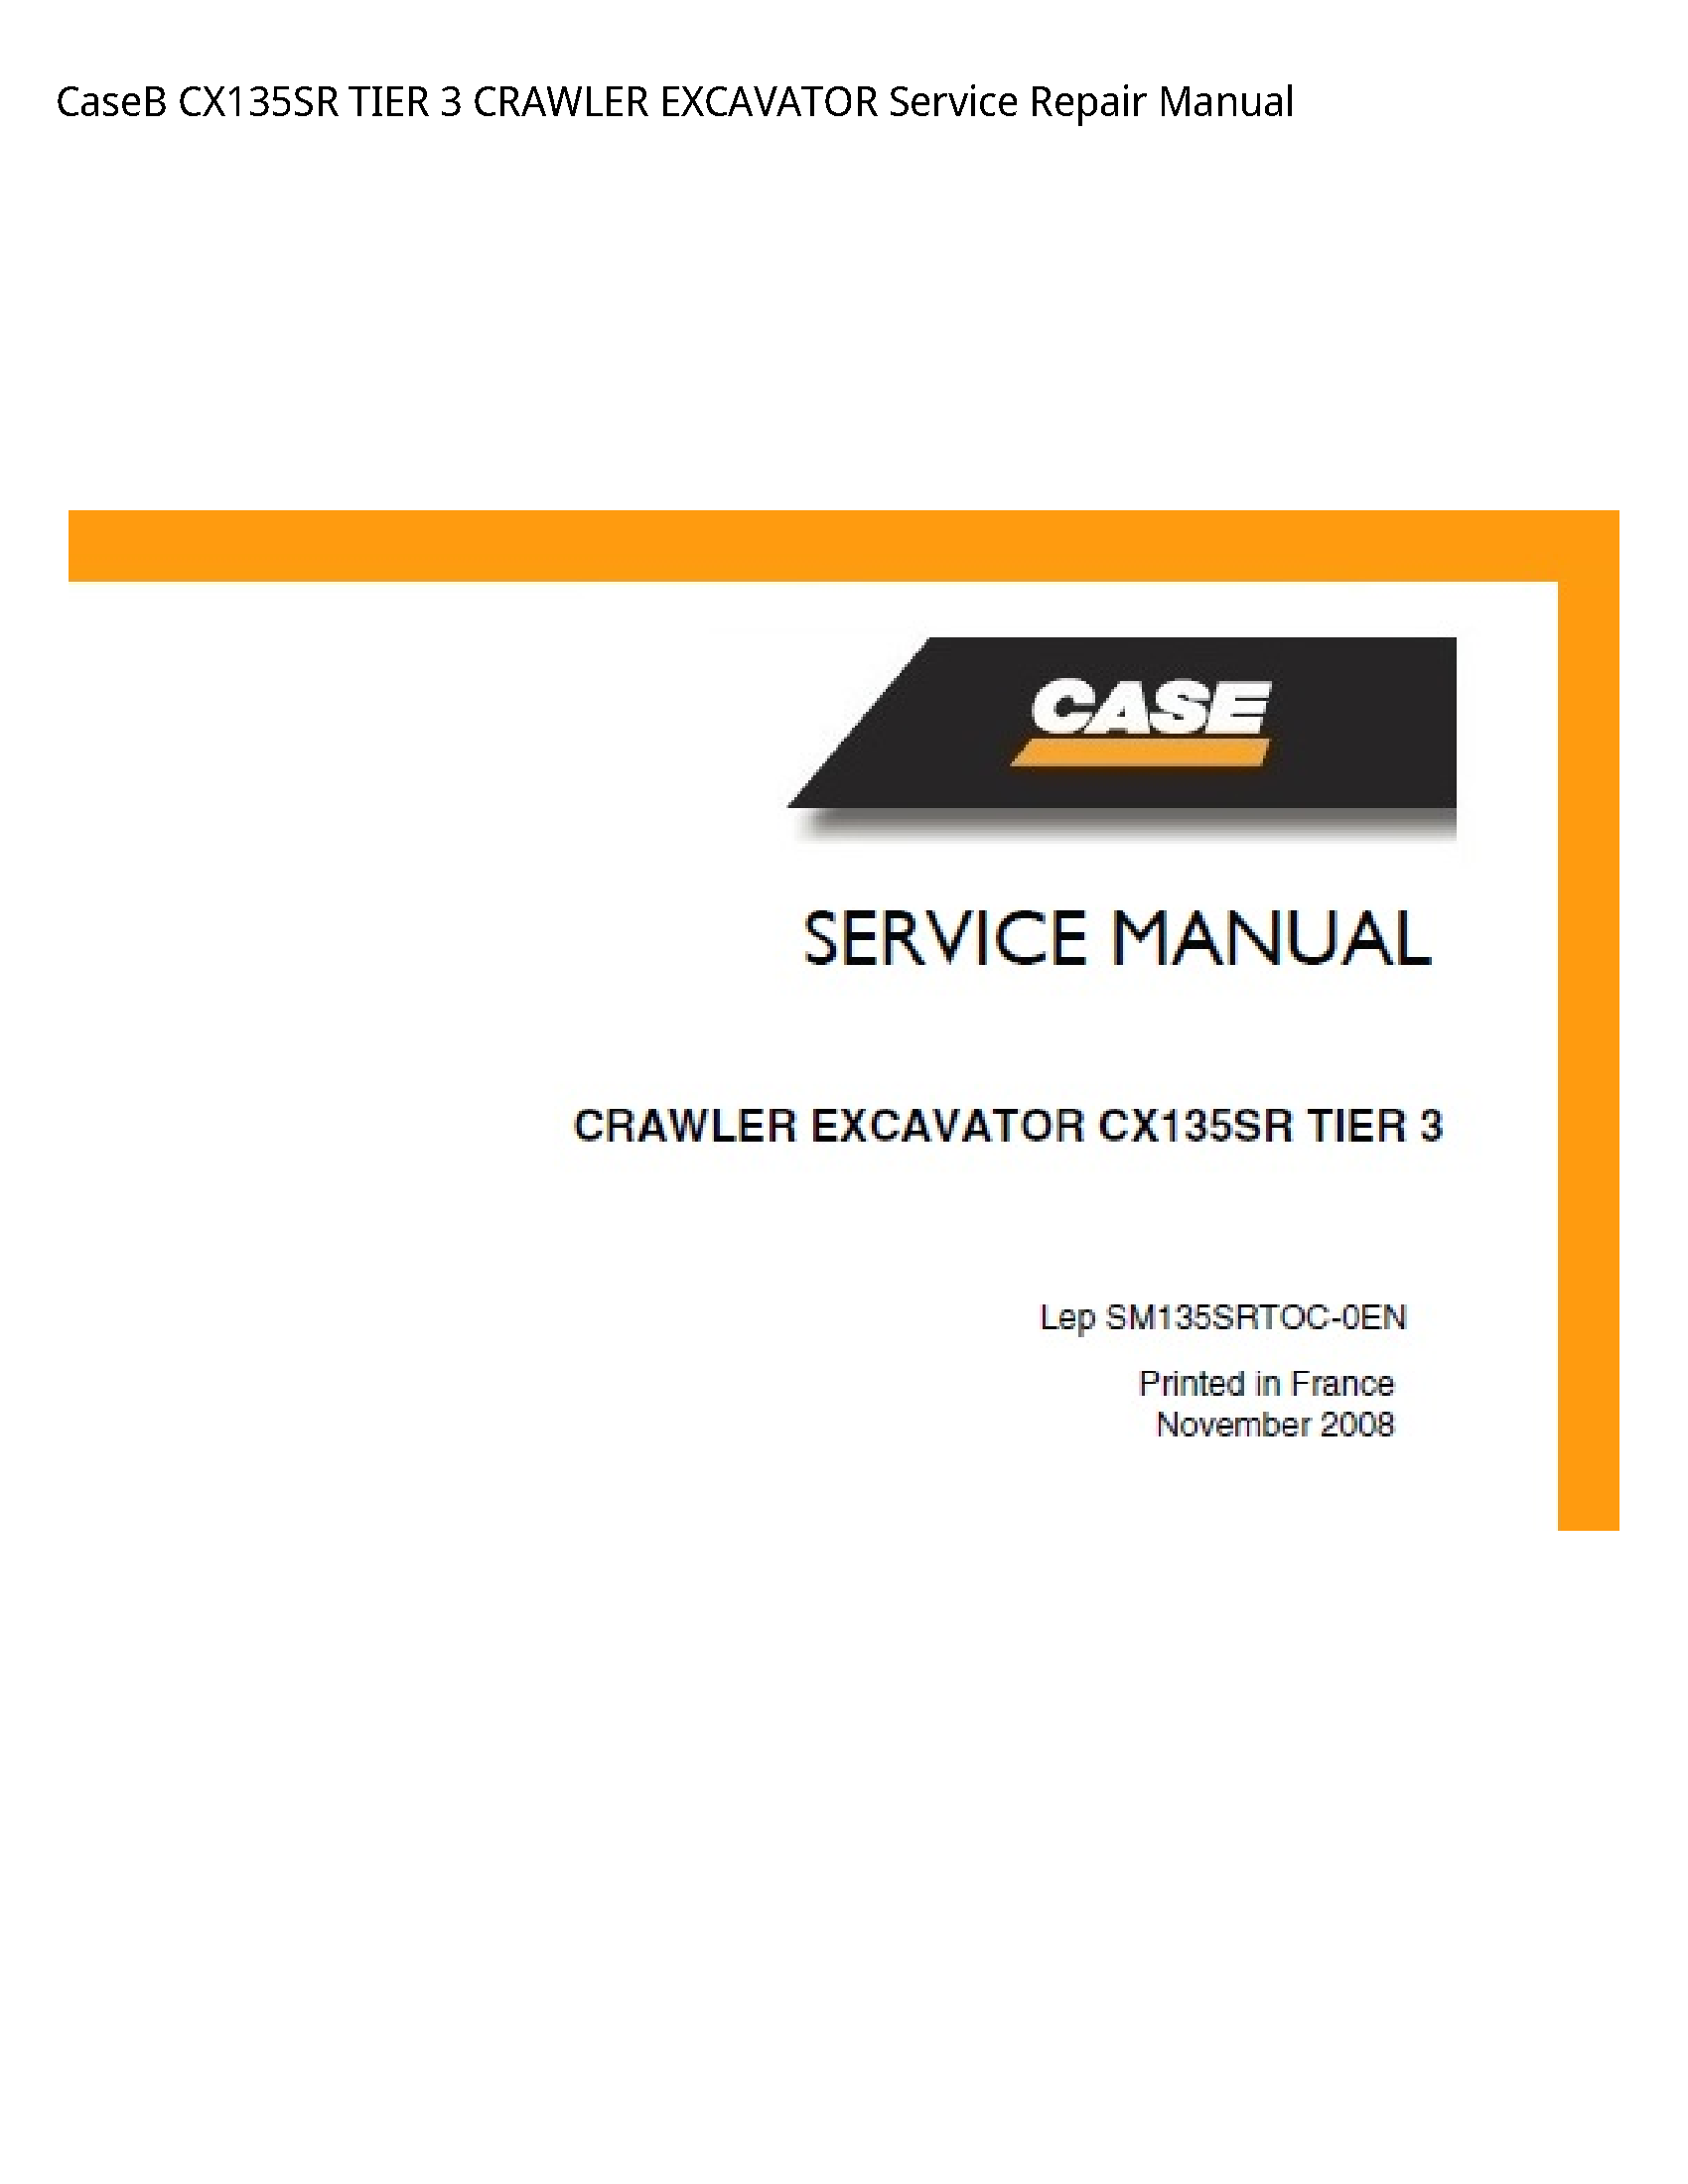 Case/Case IH CX135SR TIER CRAWLER EXCAVATOR manual